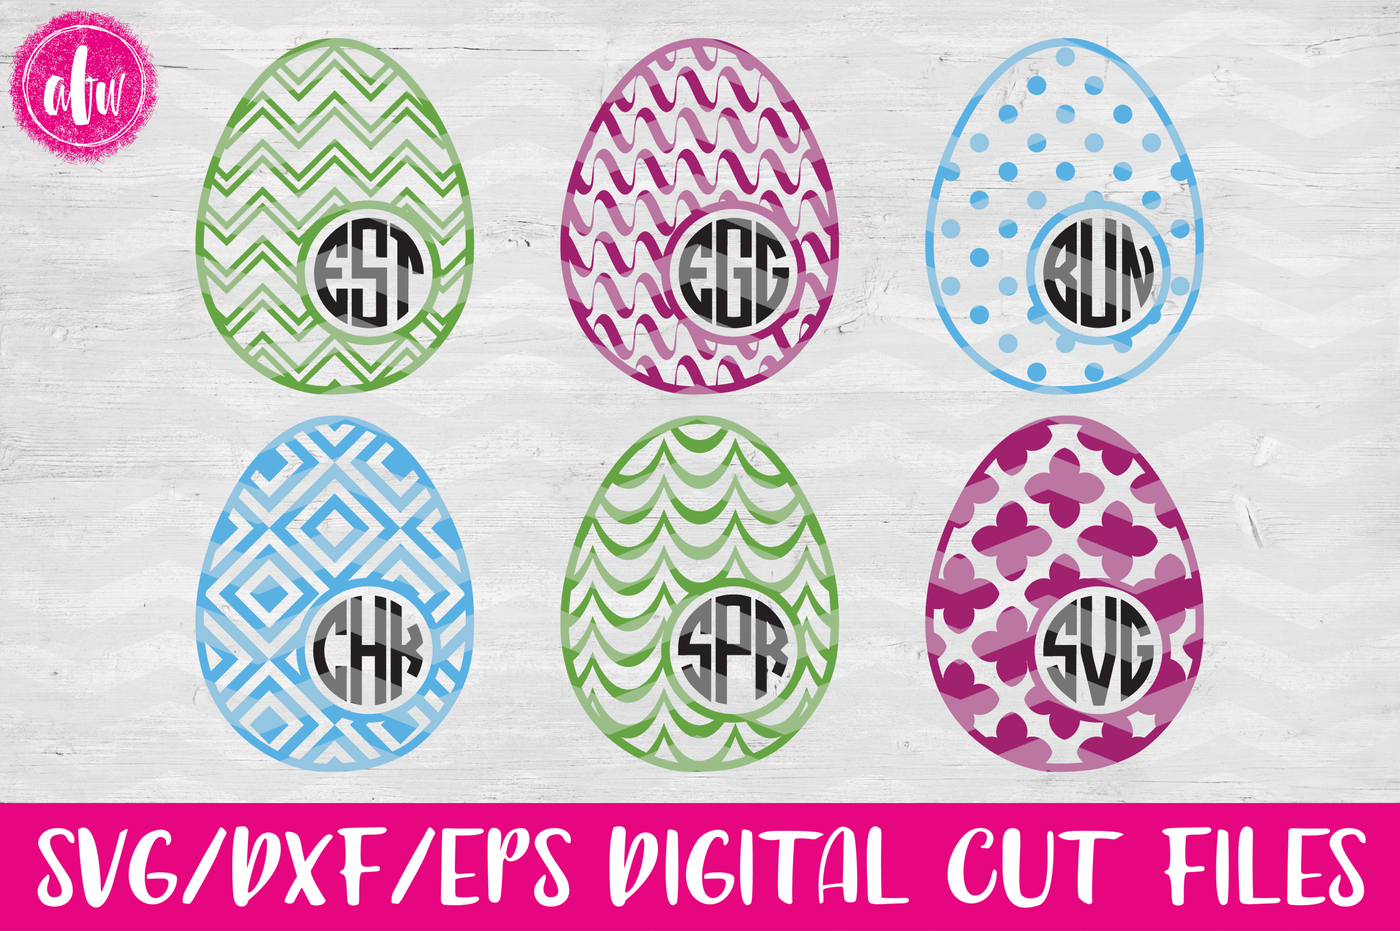 Patterned Monogram Easter Eggs Set #2 - SVG, DXF, EPS Cut Files By AFW